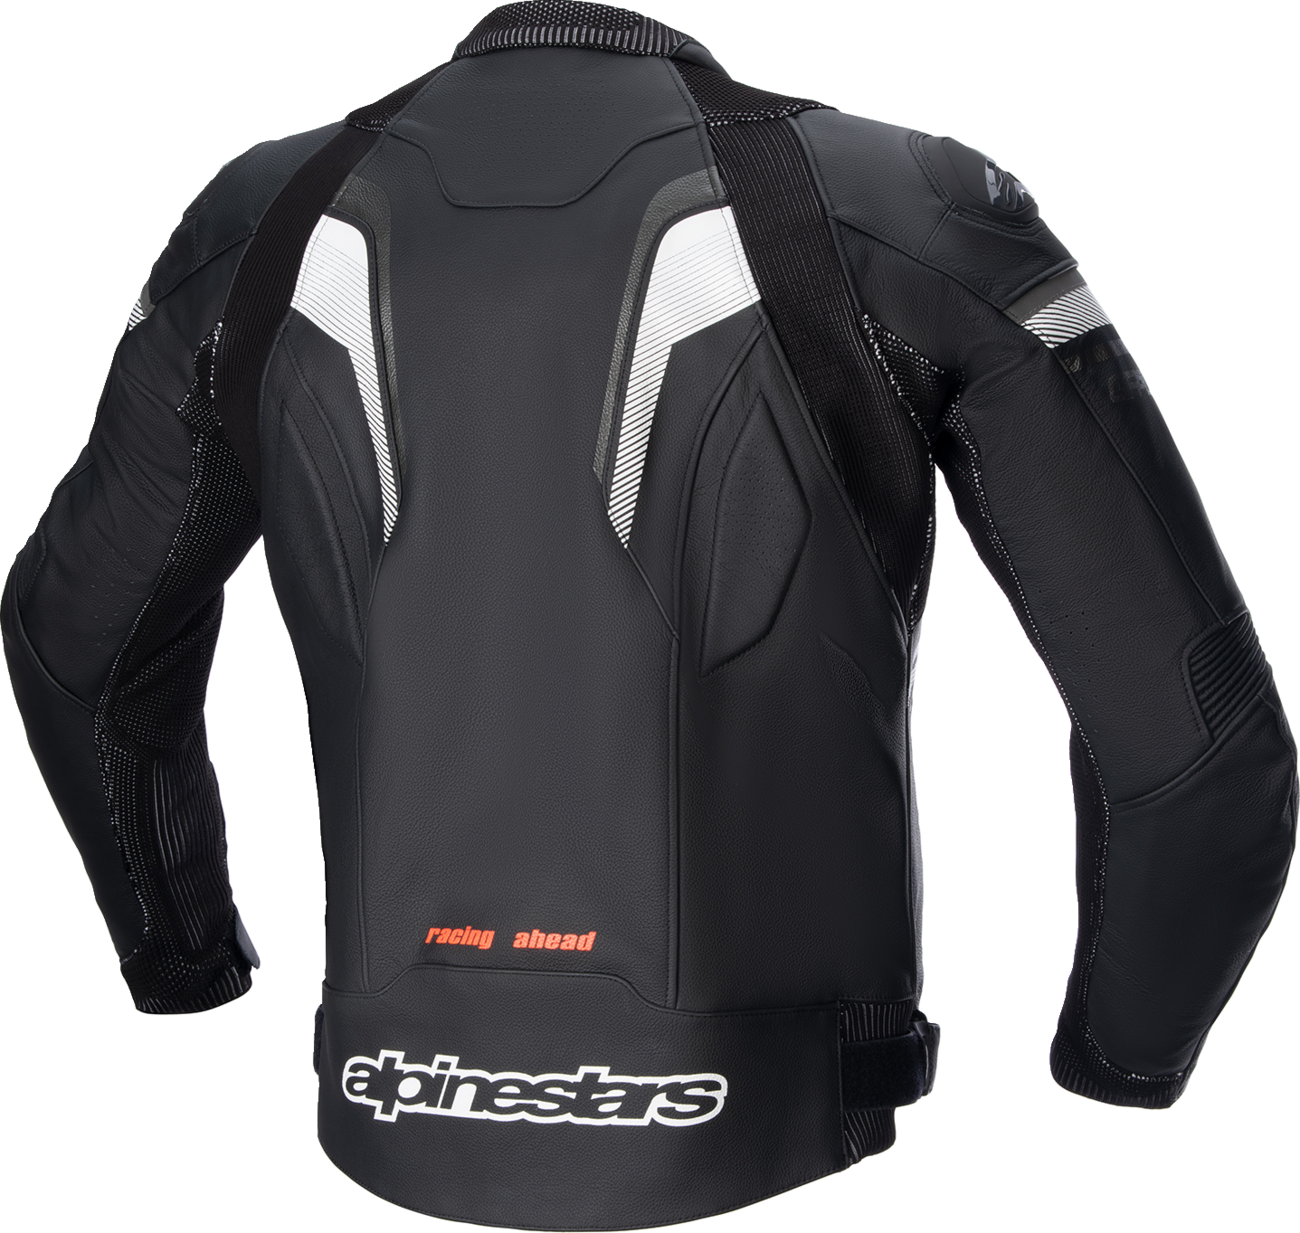 ALPINESTARS GP Plus R v3 Rideknit Leather Jacket - Black/White - US 40 / EU 50 31003211250